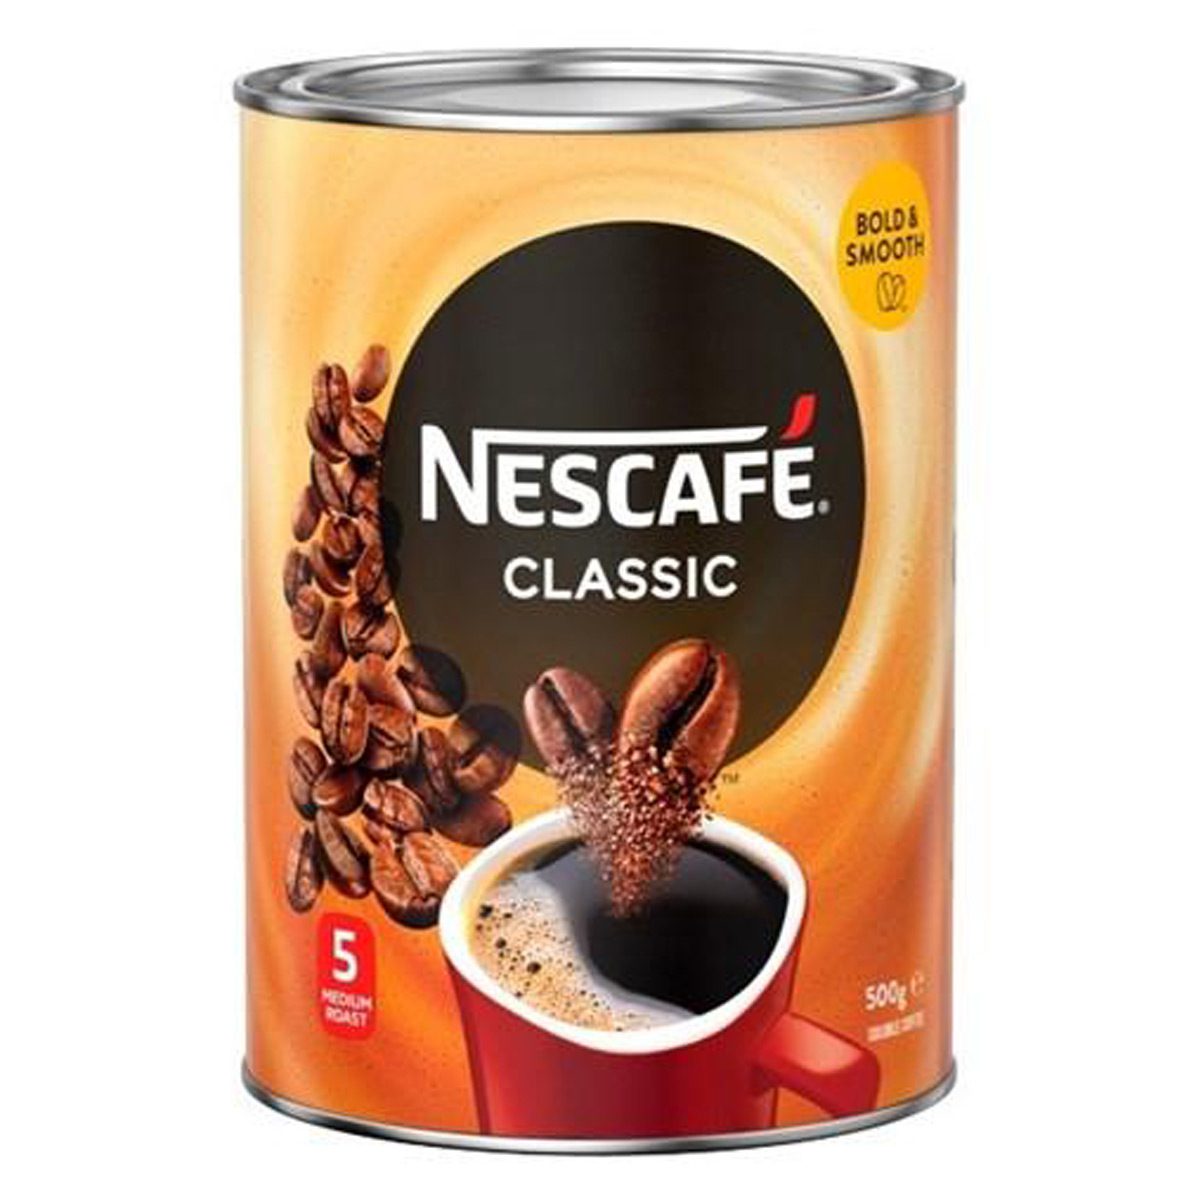 consumables-hospitality-beverage-food-nescafe-classic-ram-tin-500gm-new-zealands-favourite-granular-coffee-medium-dark-roasted-robusta-beans-granules-dissolve-quickly-vjs-distributors-COFFEENC